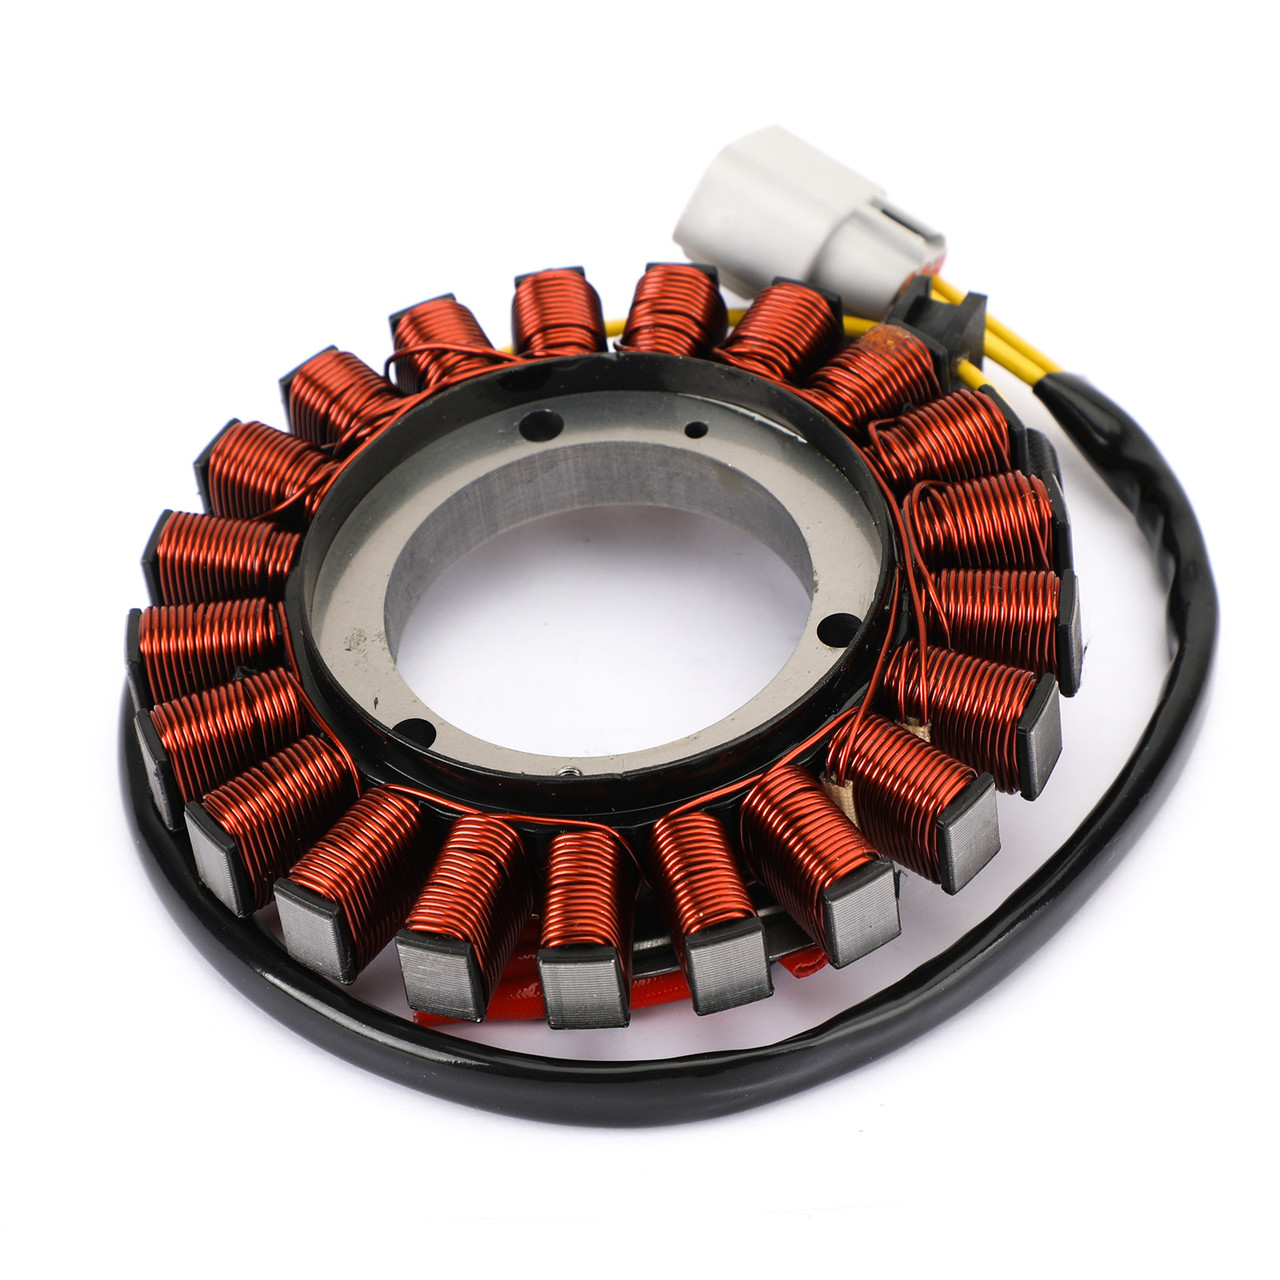 Magneto Generator Engine Stator Coil Fit For BMW R1200RT K52 R1200R K53 13-18 R1250RT K52 R1250R K53 17-19